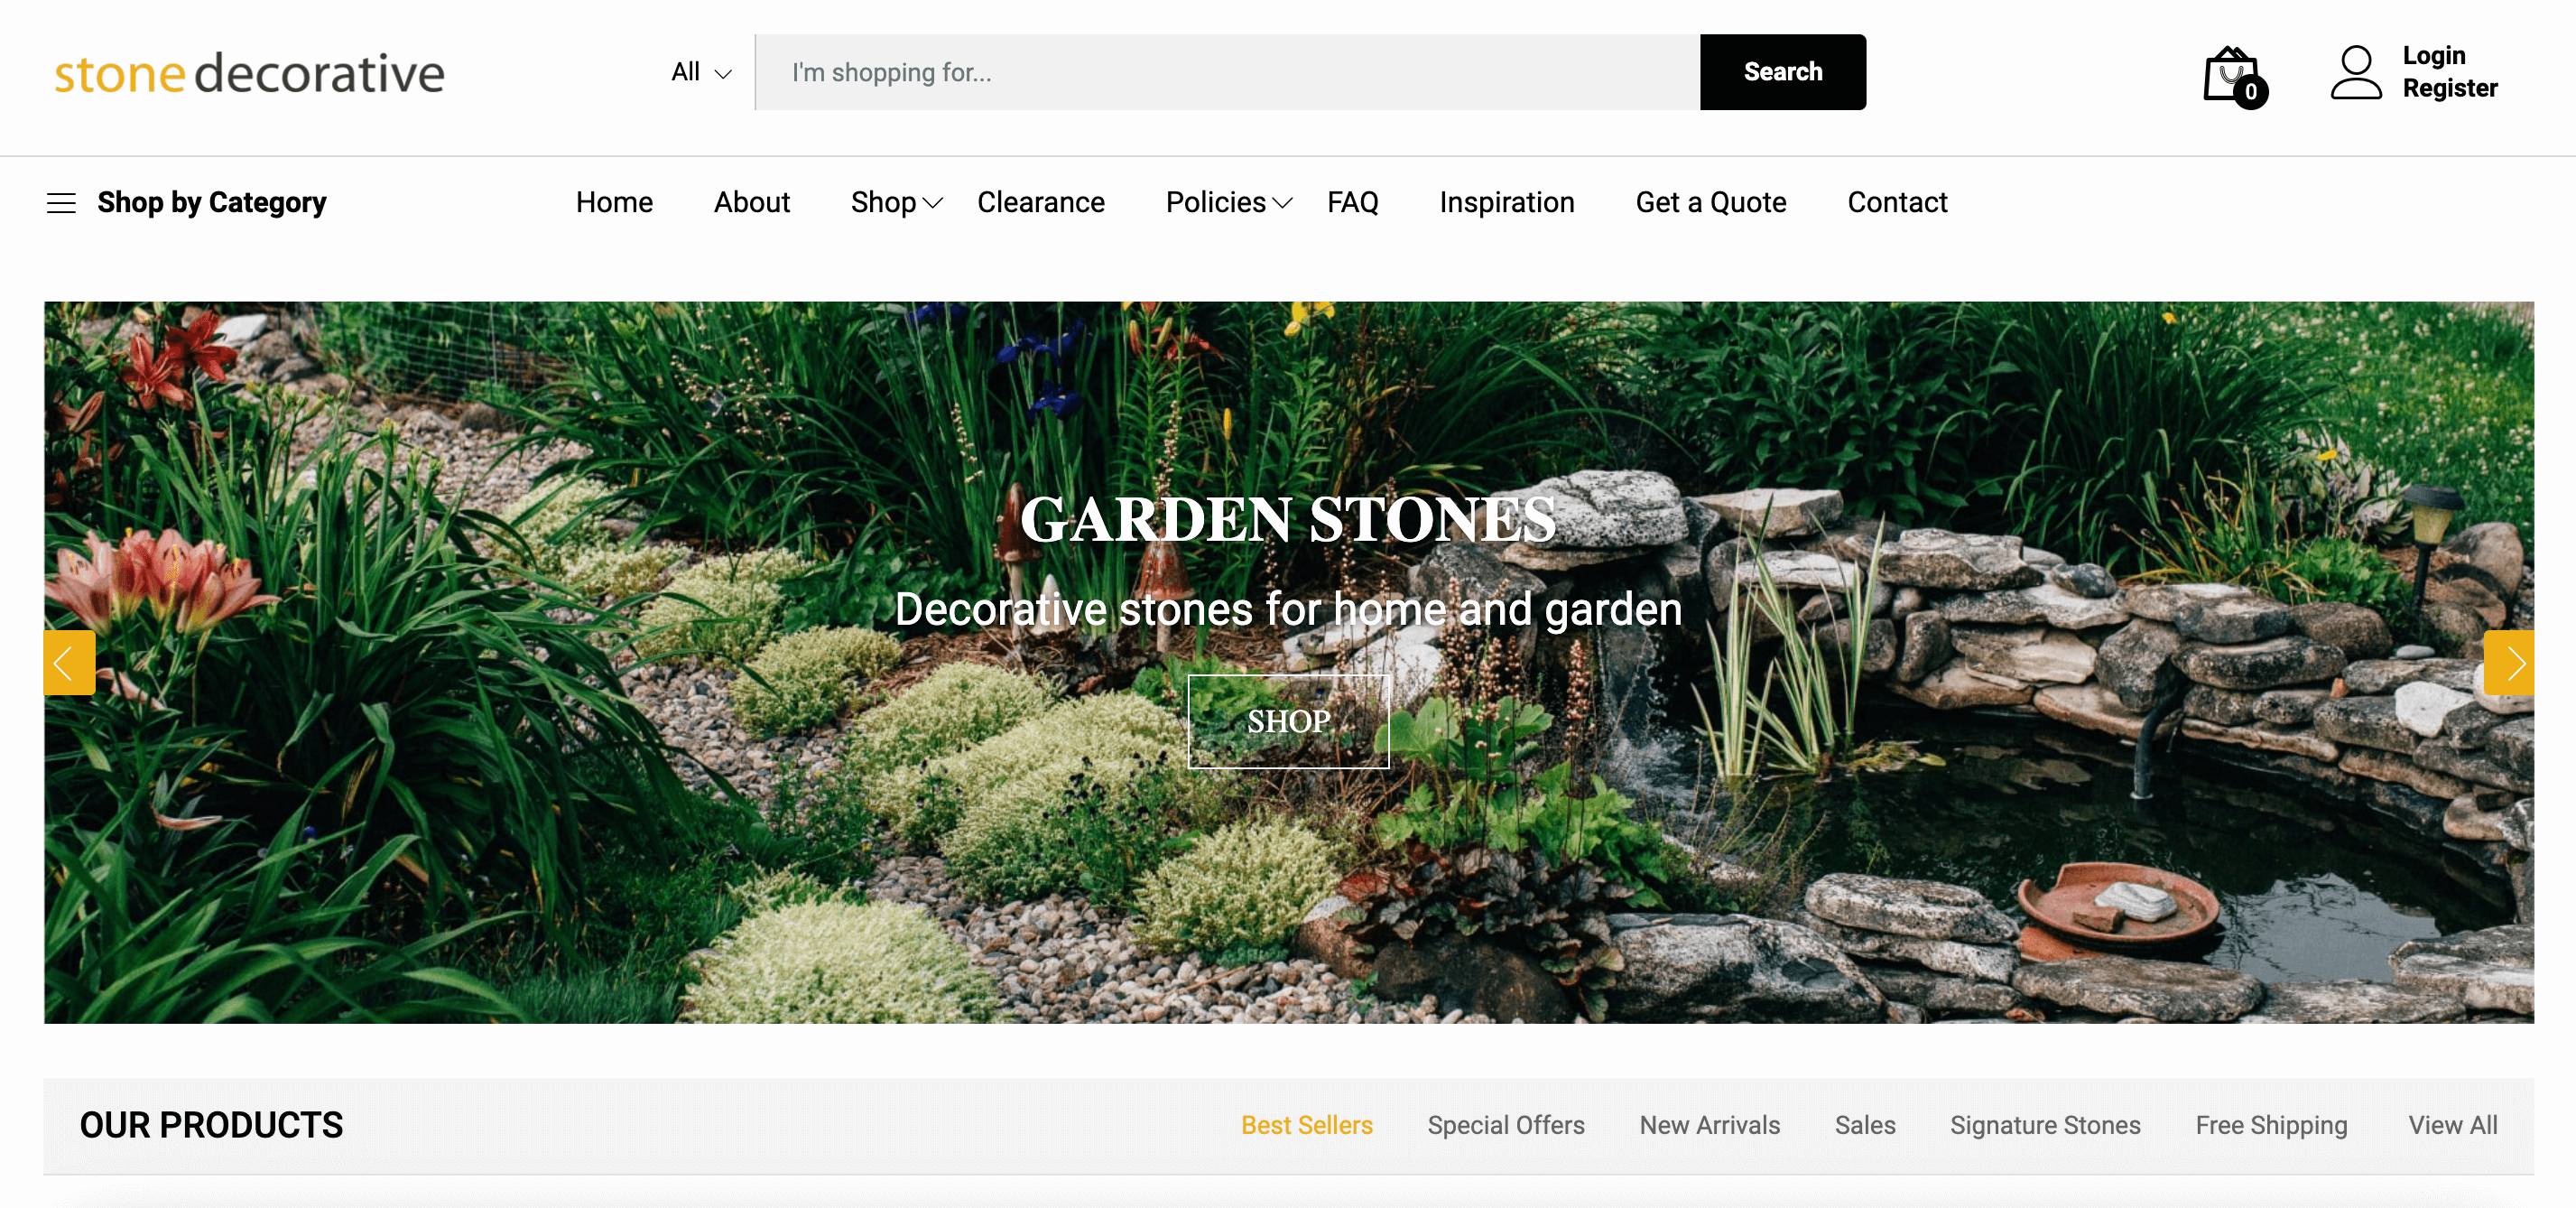 A beautiful garden store WordPress theme showcasing decorative stones & river rock